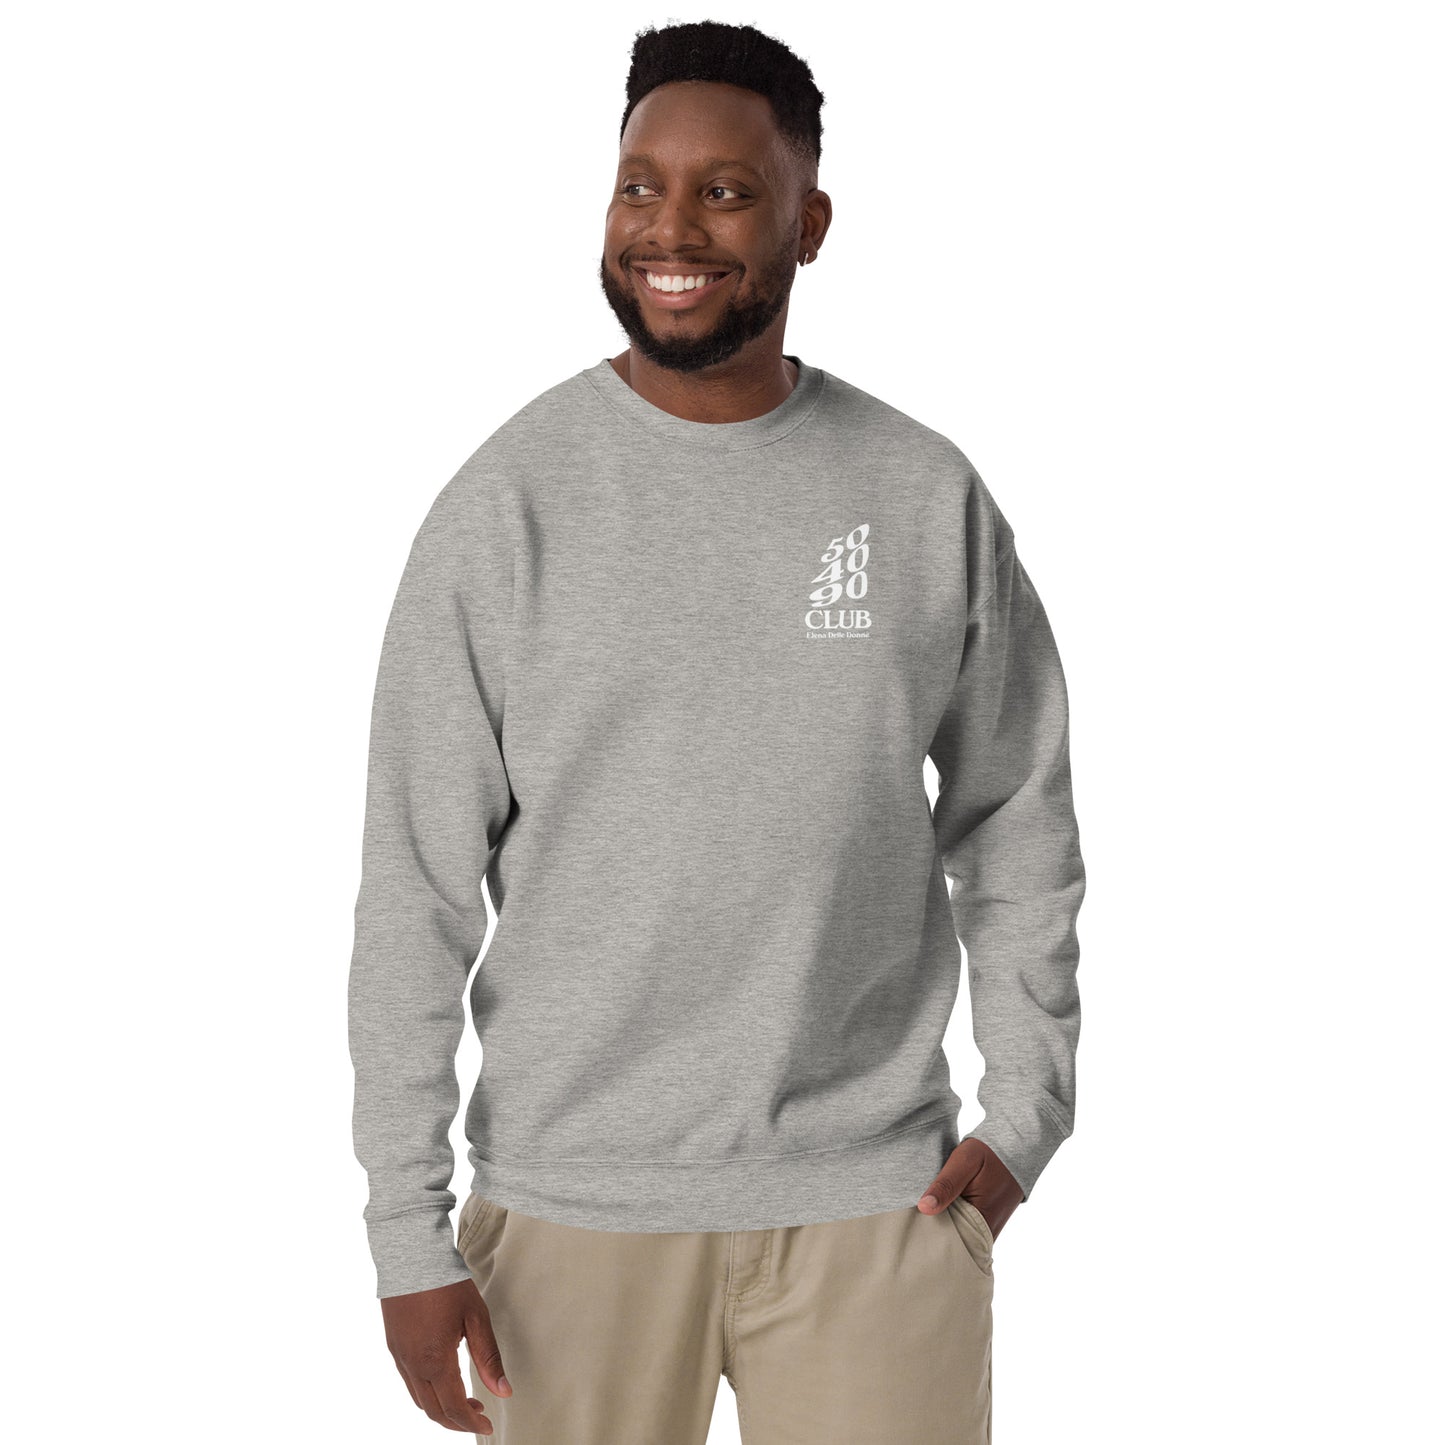 50-40-90 Club Crew Sweater